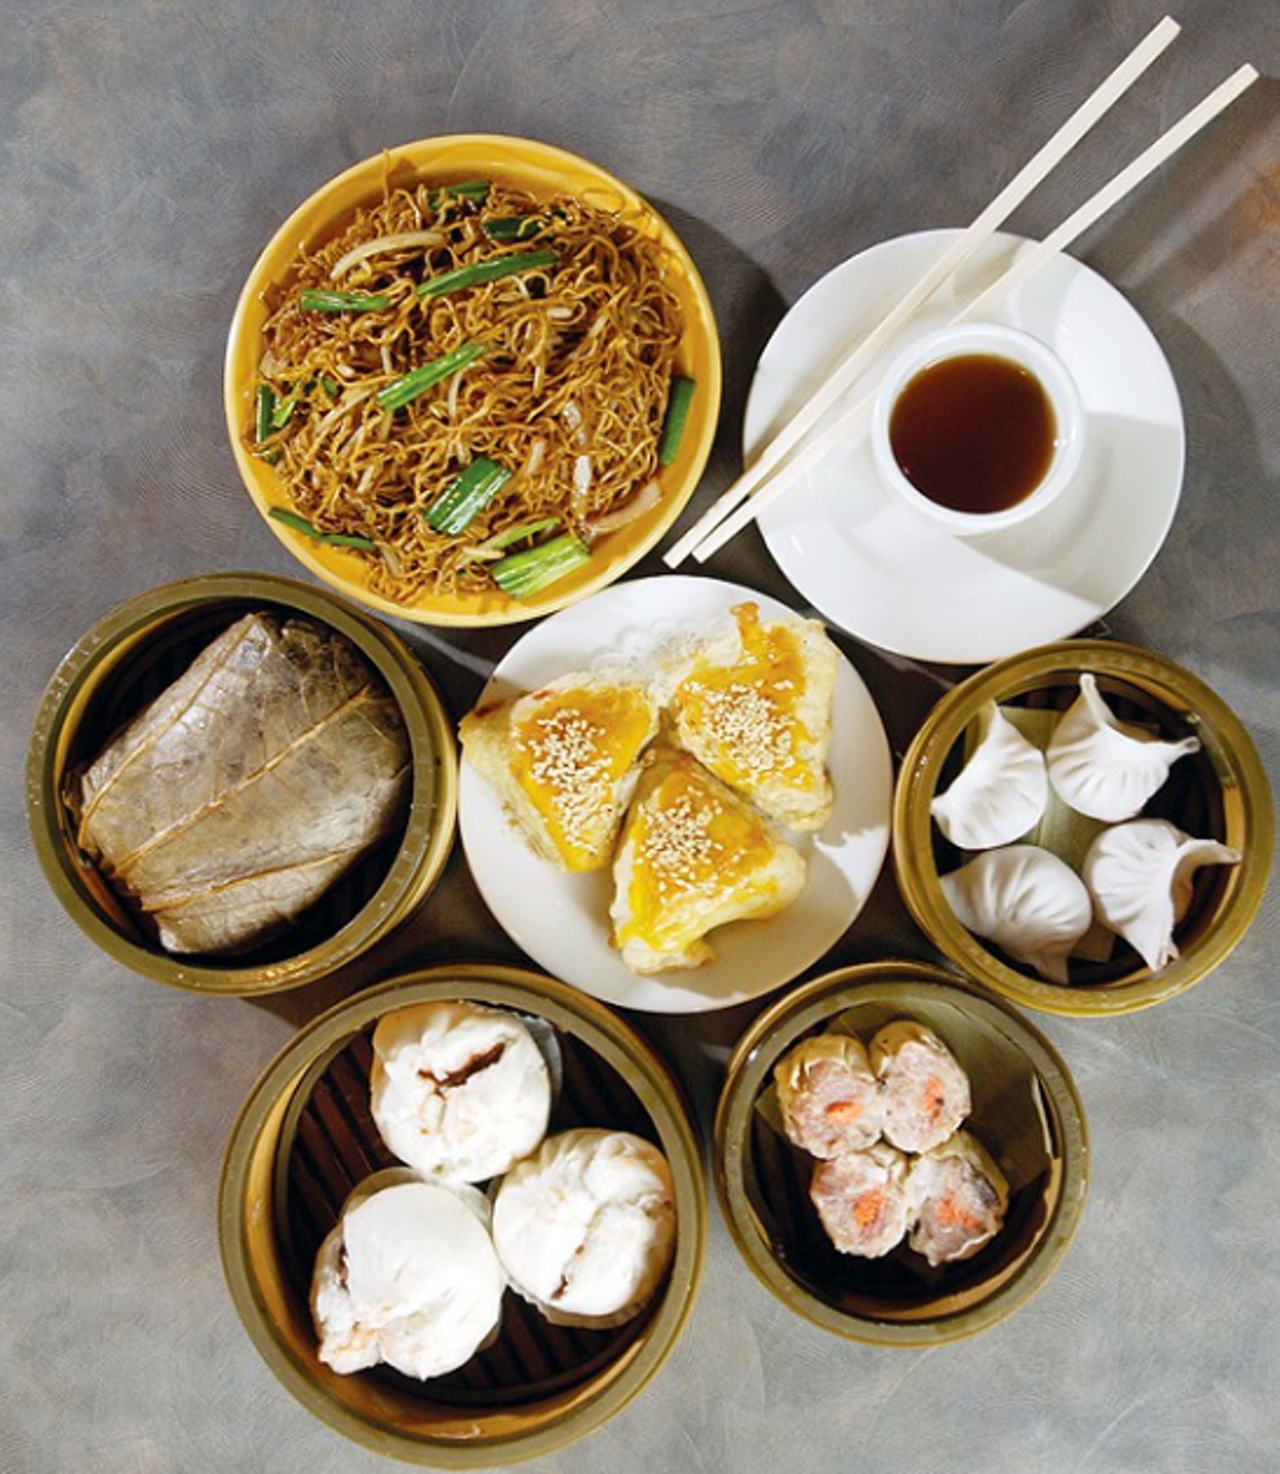 Best Chinese Food: Golden Wok